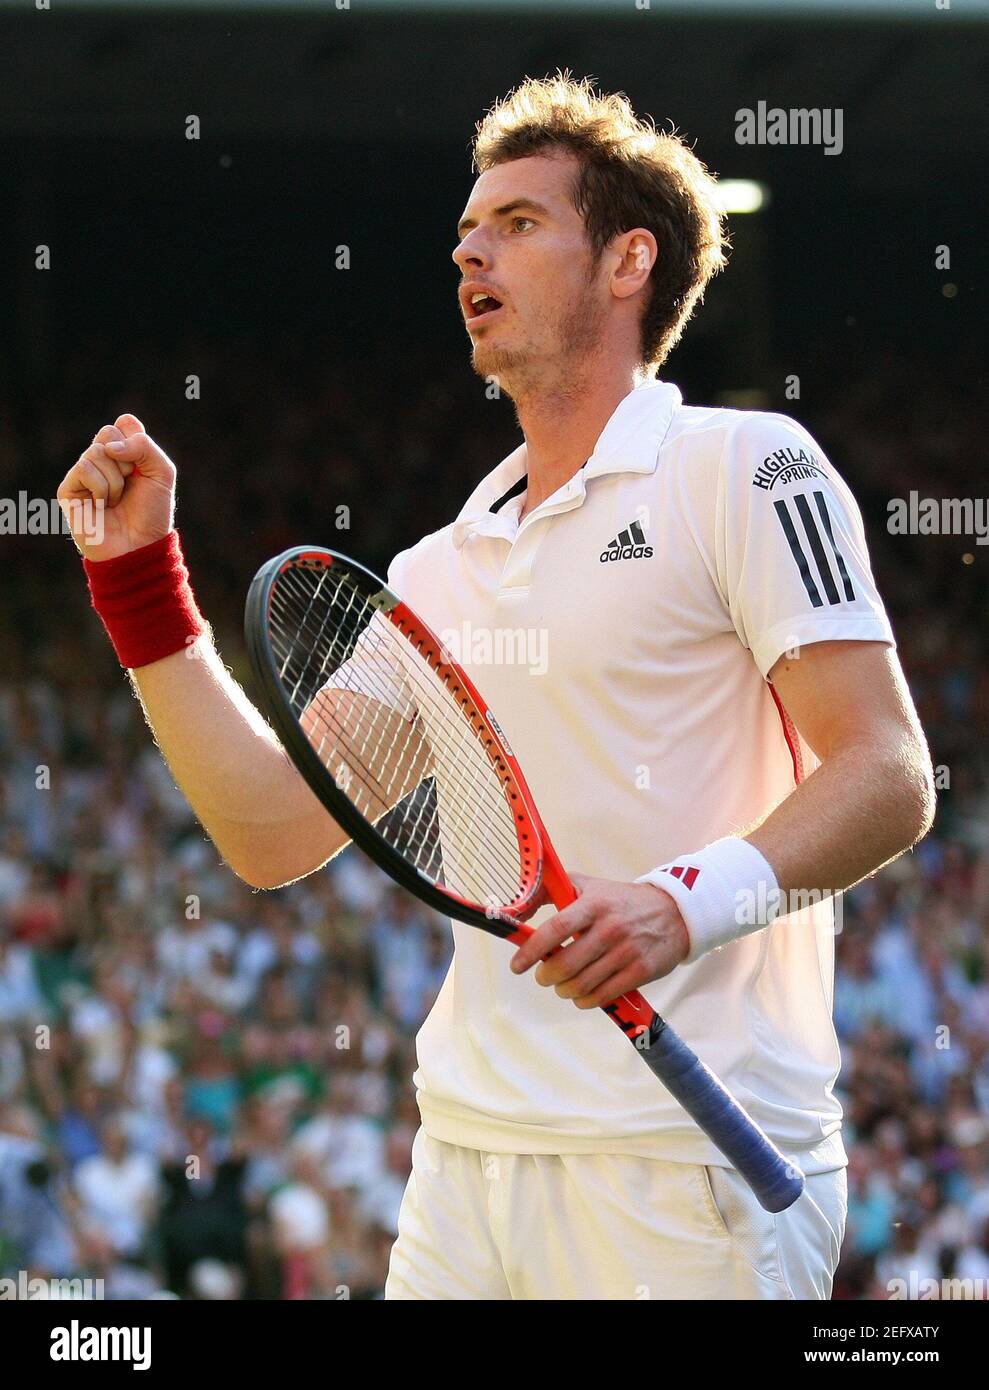 Factibilidad mentiroso escaldadura Tenis - Wimbledon - All England Lawn Tennis & Croquet Club, Wimbledon,  Inglaterra - 28/6/10 Andy Murray